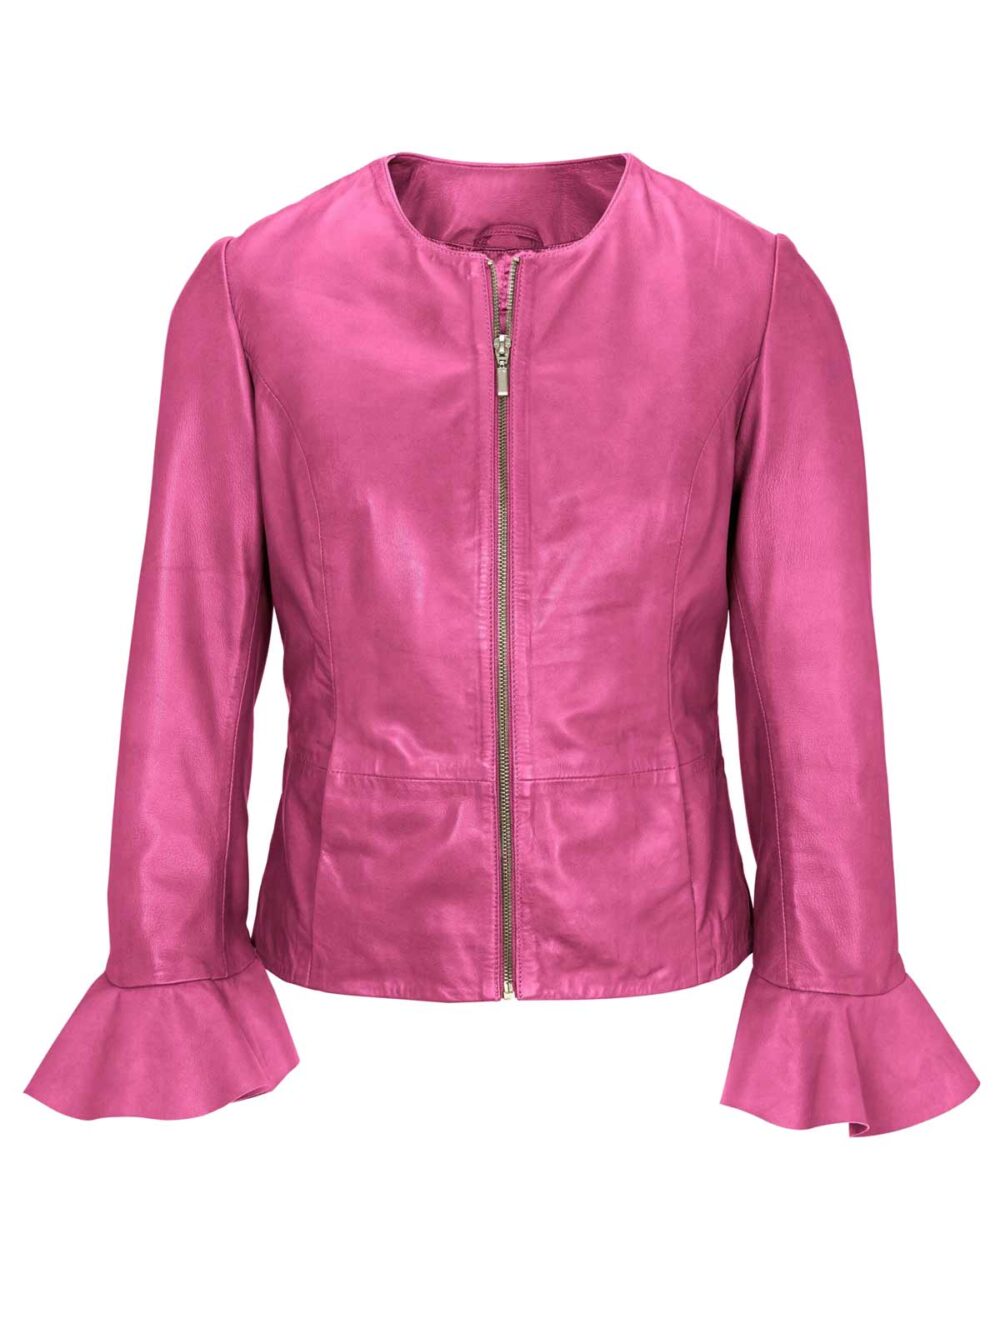 Damenmäntel Frühjahr 2021 HEINE Damen Lederjacke Jacke echtes Leder handschuhweiches Lammnappa pink 697.425 Missforty